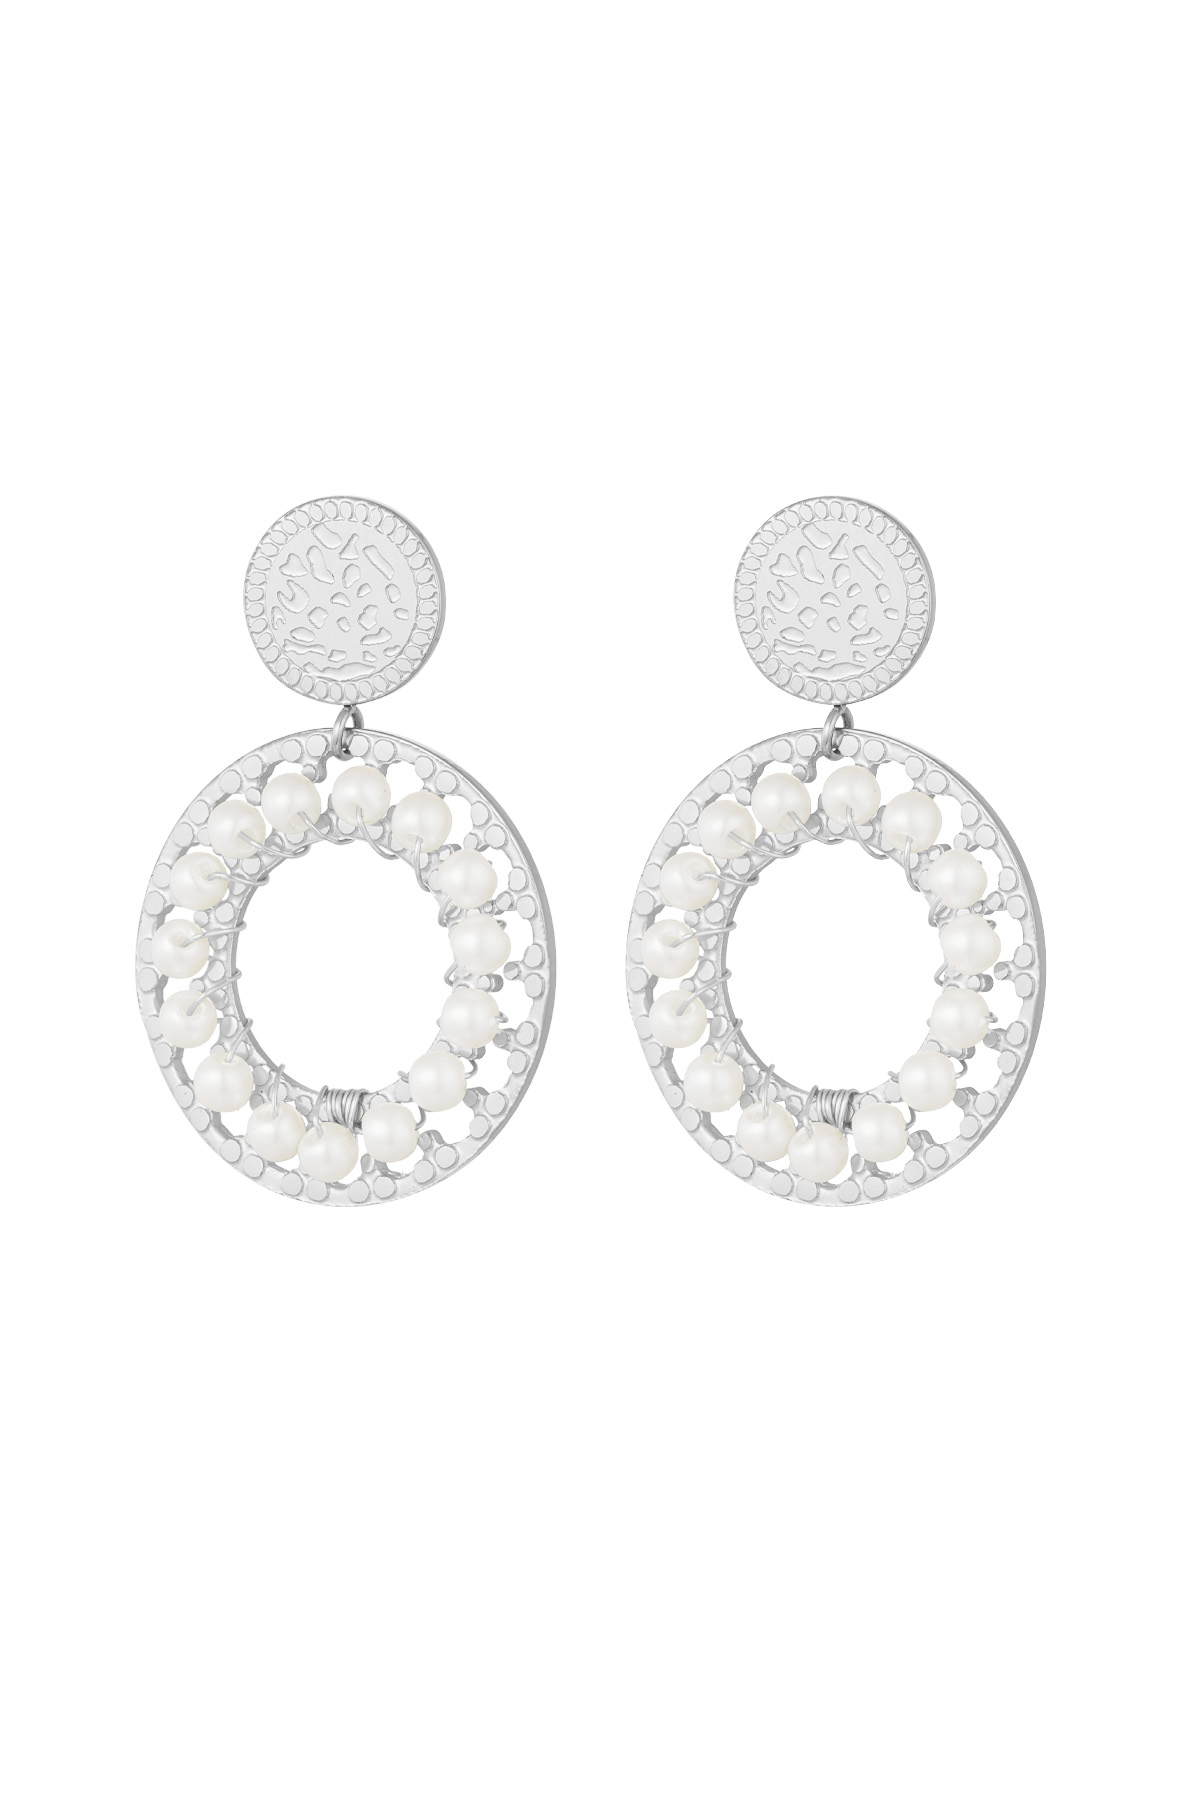 Doppelkreis-Ohrringe mit Perlen – Silber h5 